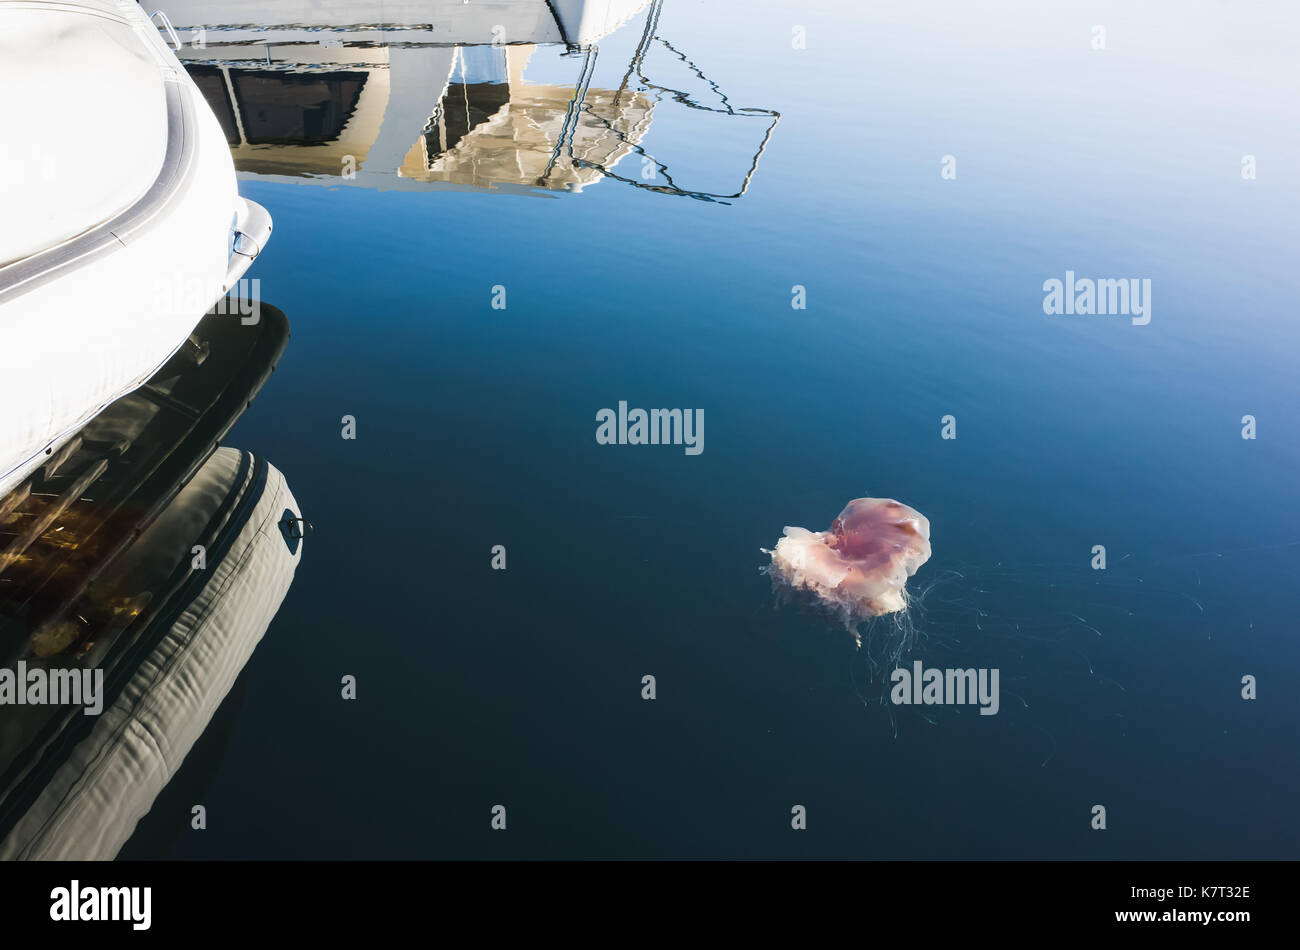 Lions Mane Jellyfish Cyanea capillata floating near moored yachts in Norwegian Sea Stock Photo